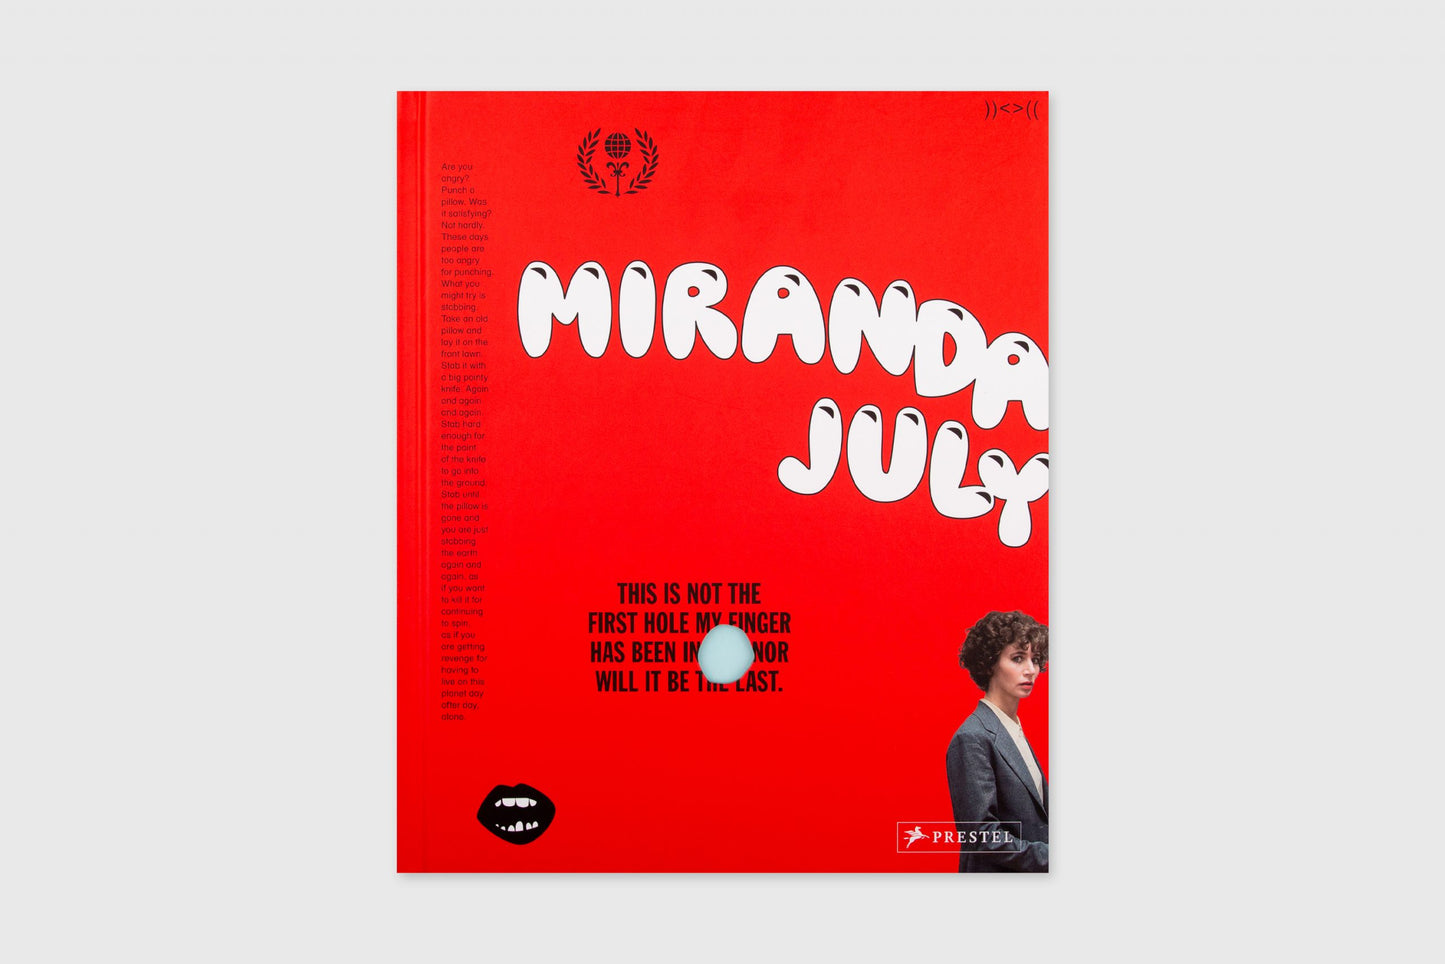 Miranda July